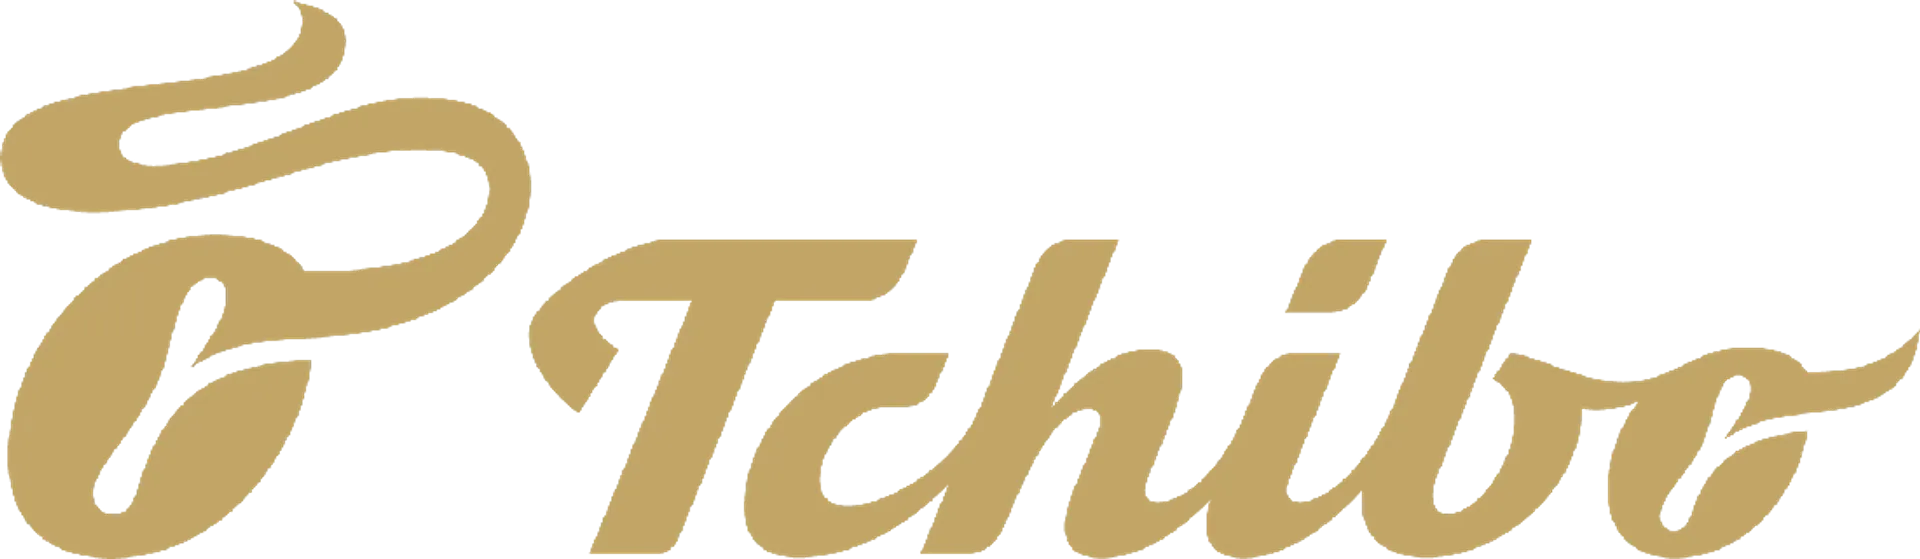 TCHIBO logo of current catalogue